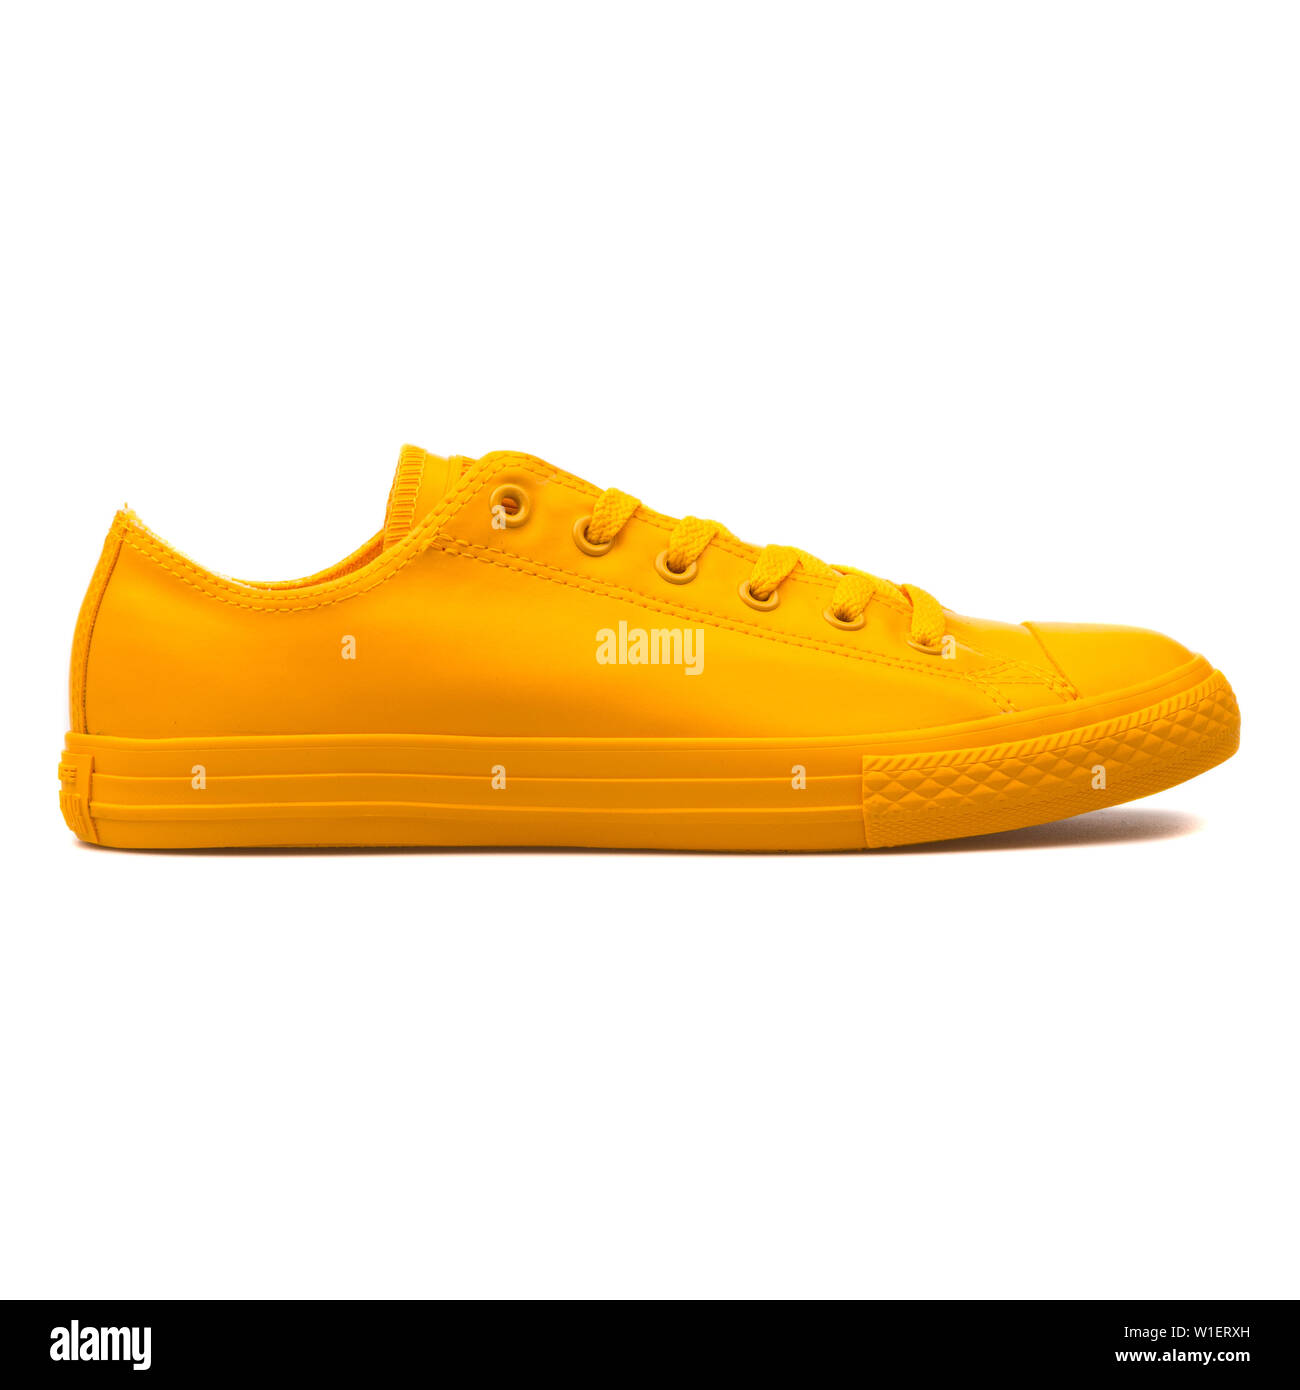 Star Rubber OX Honey yellow sneaker 